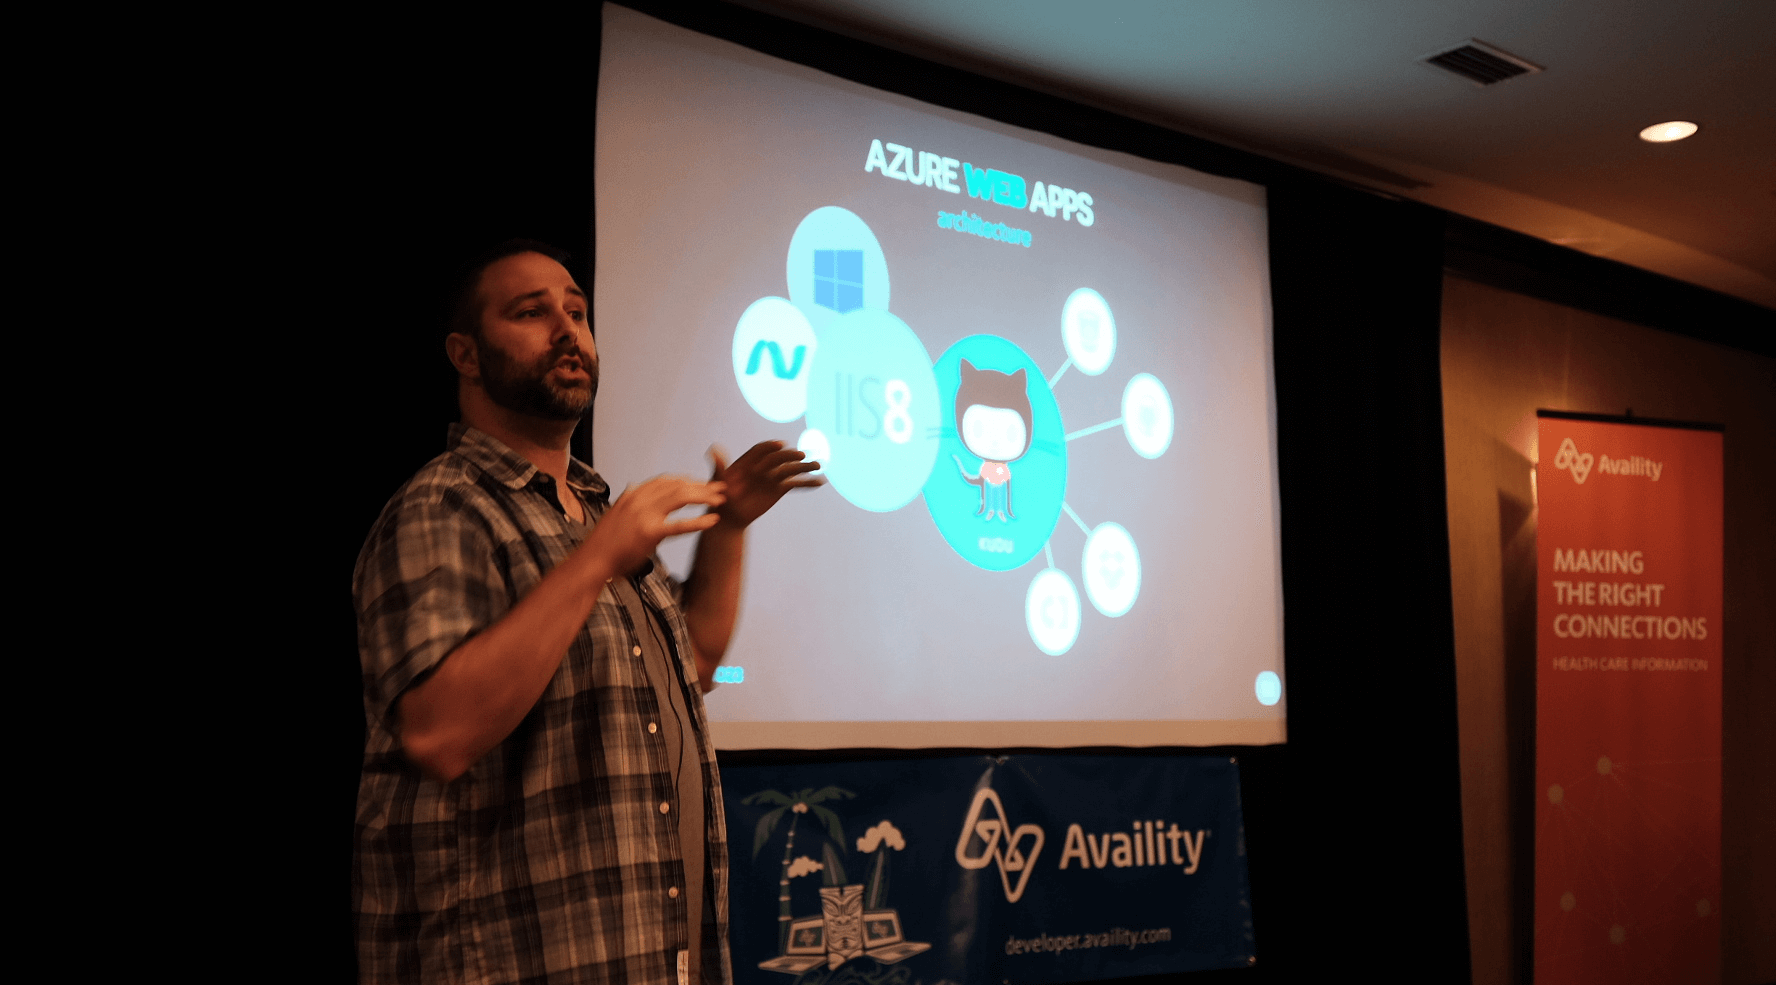 Nik Molnar's session on Azure Sites